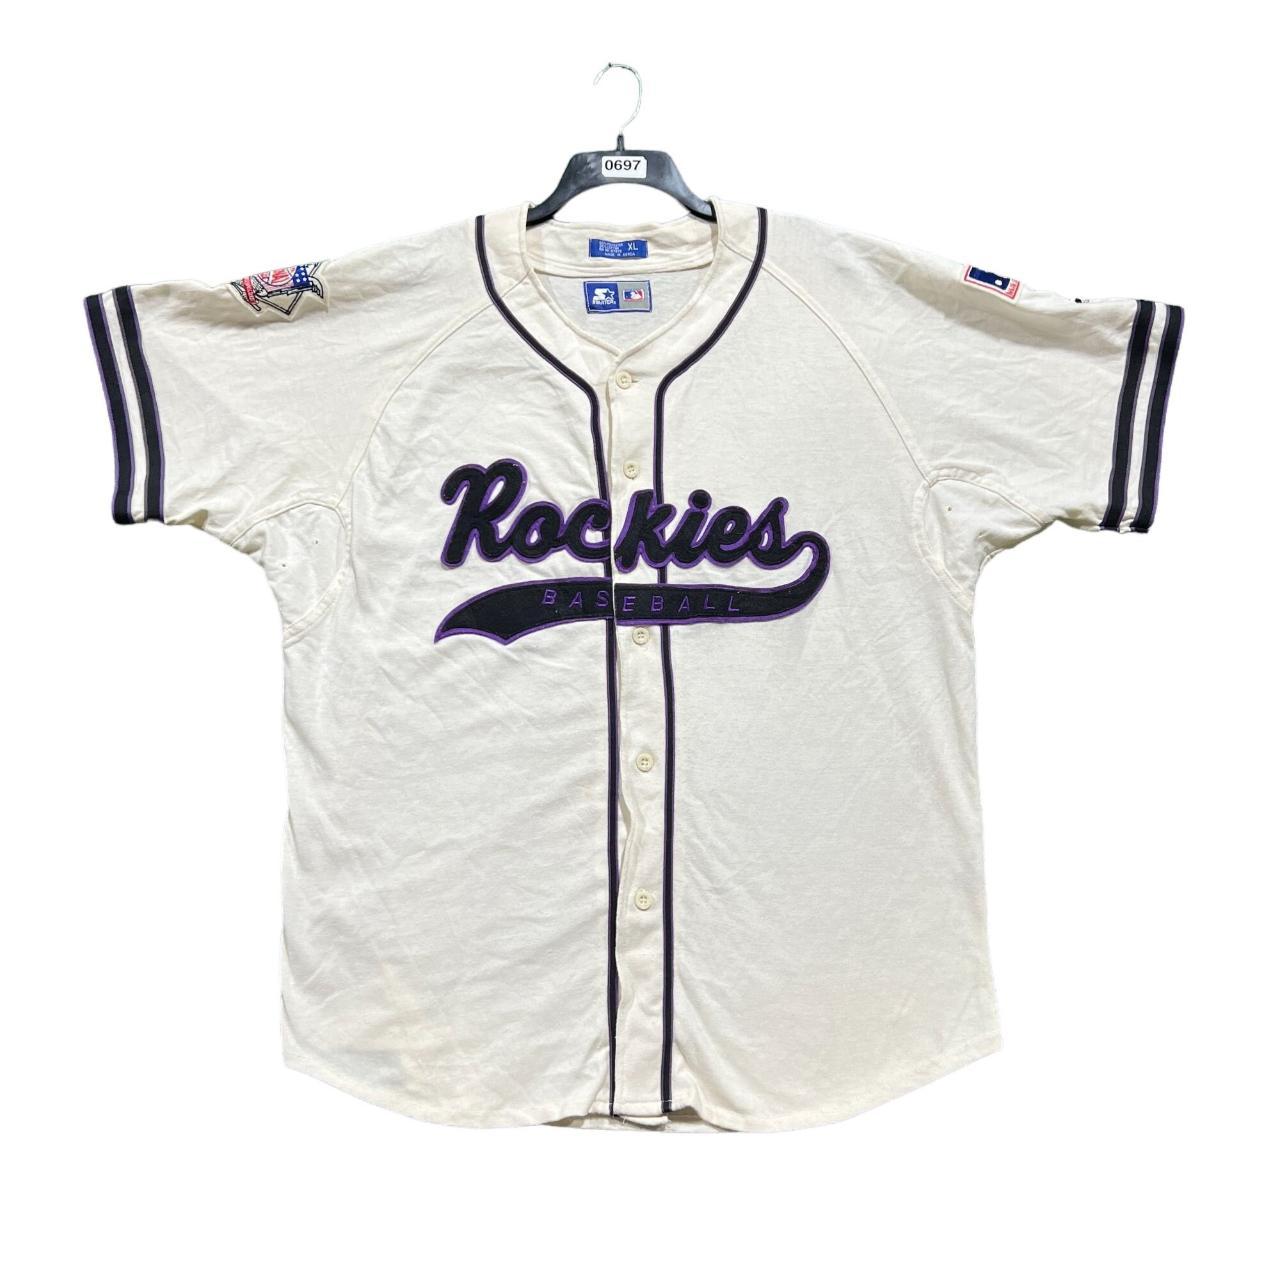 Vintage 90s colorado rockies starter basebll jersey - Depop